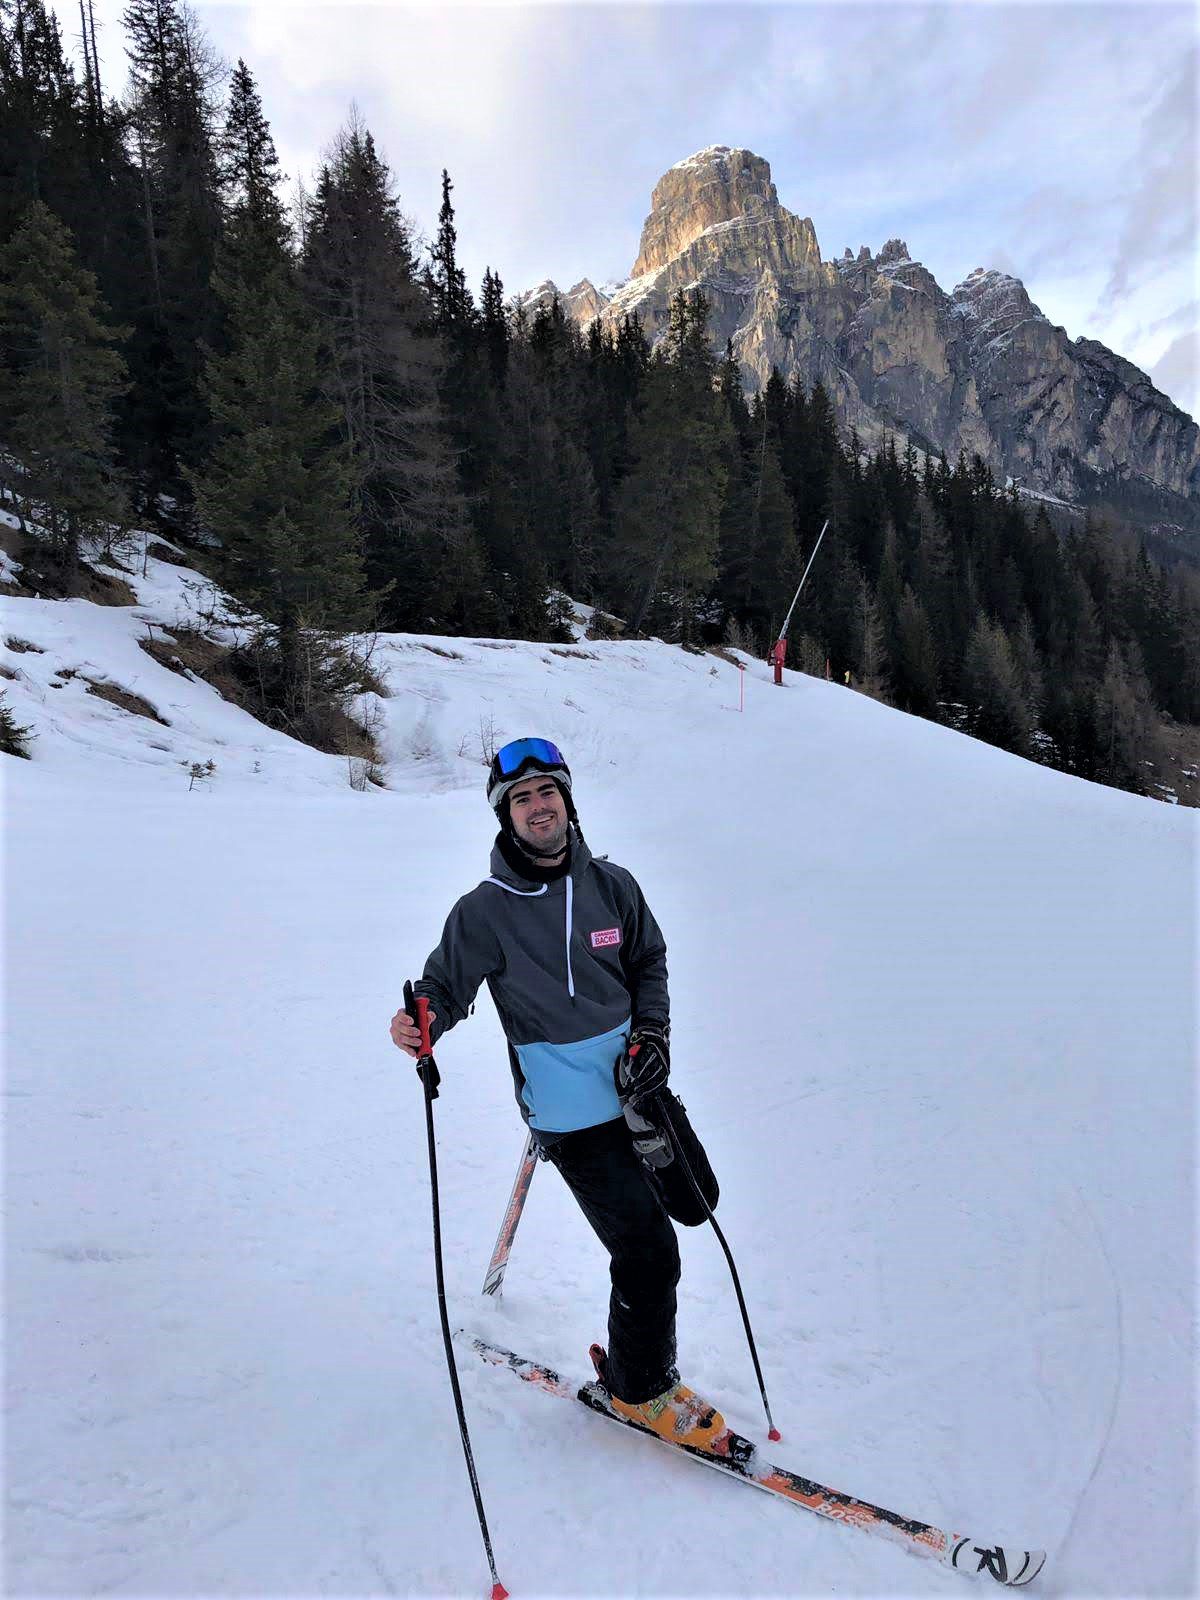 Adolfo at Dolomites skiing this past spring